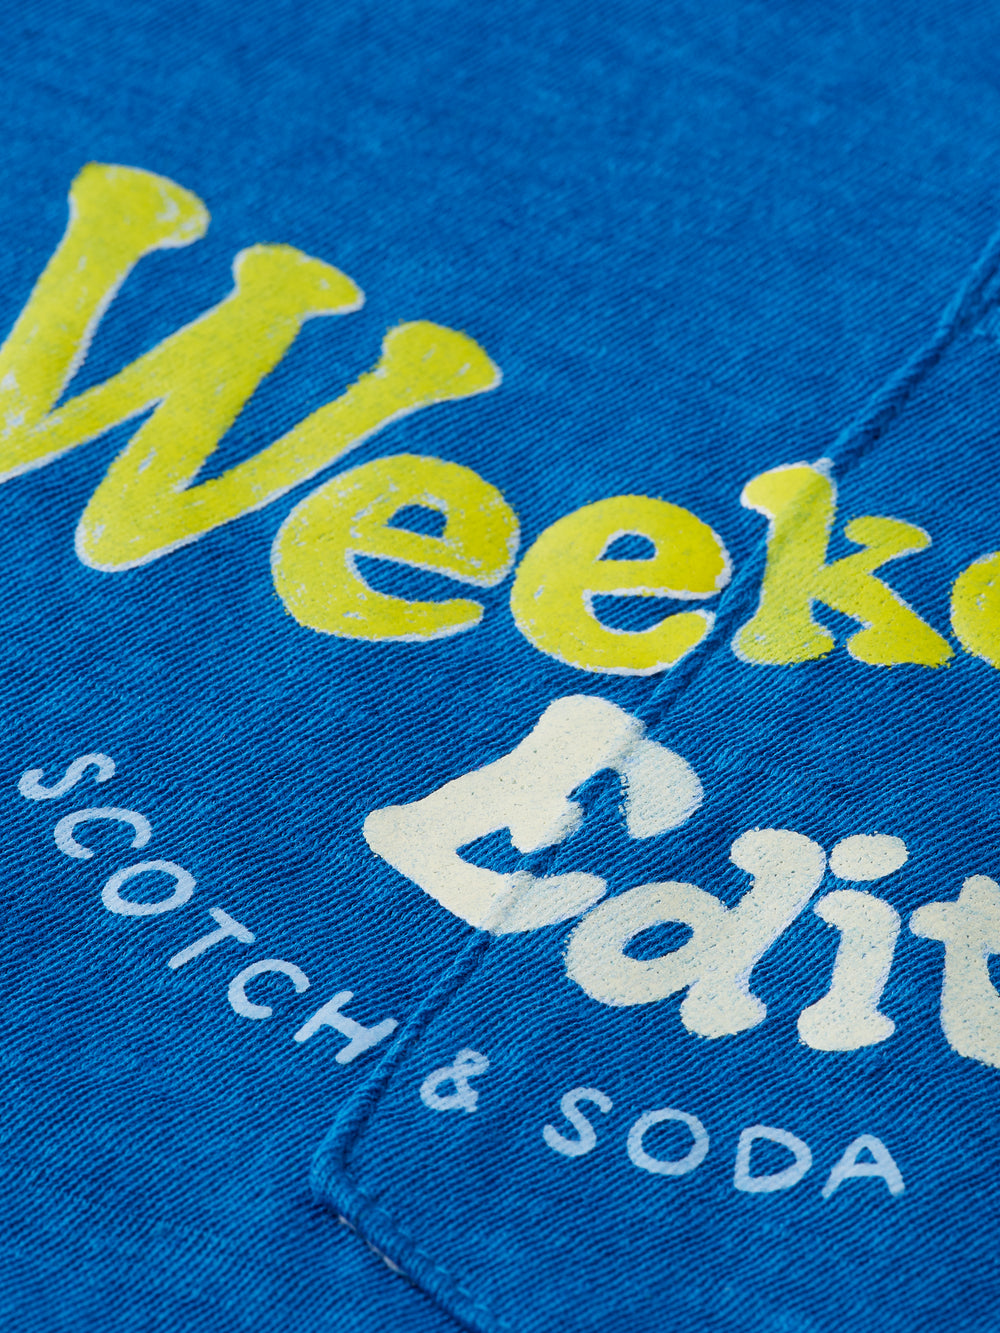 Weekend edition pocket t-shirt - Scotch & Soda NZ